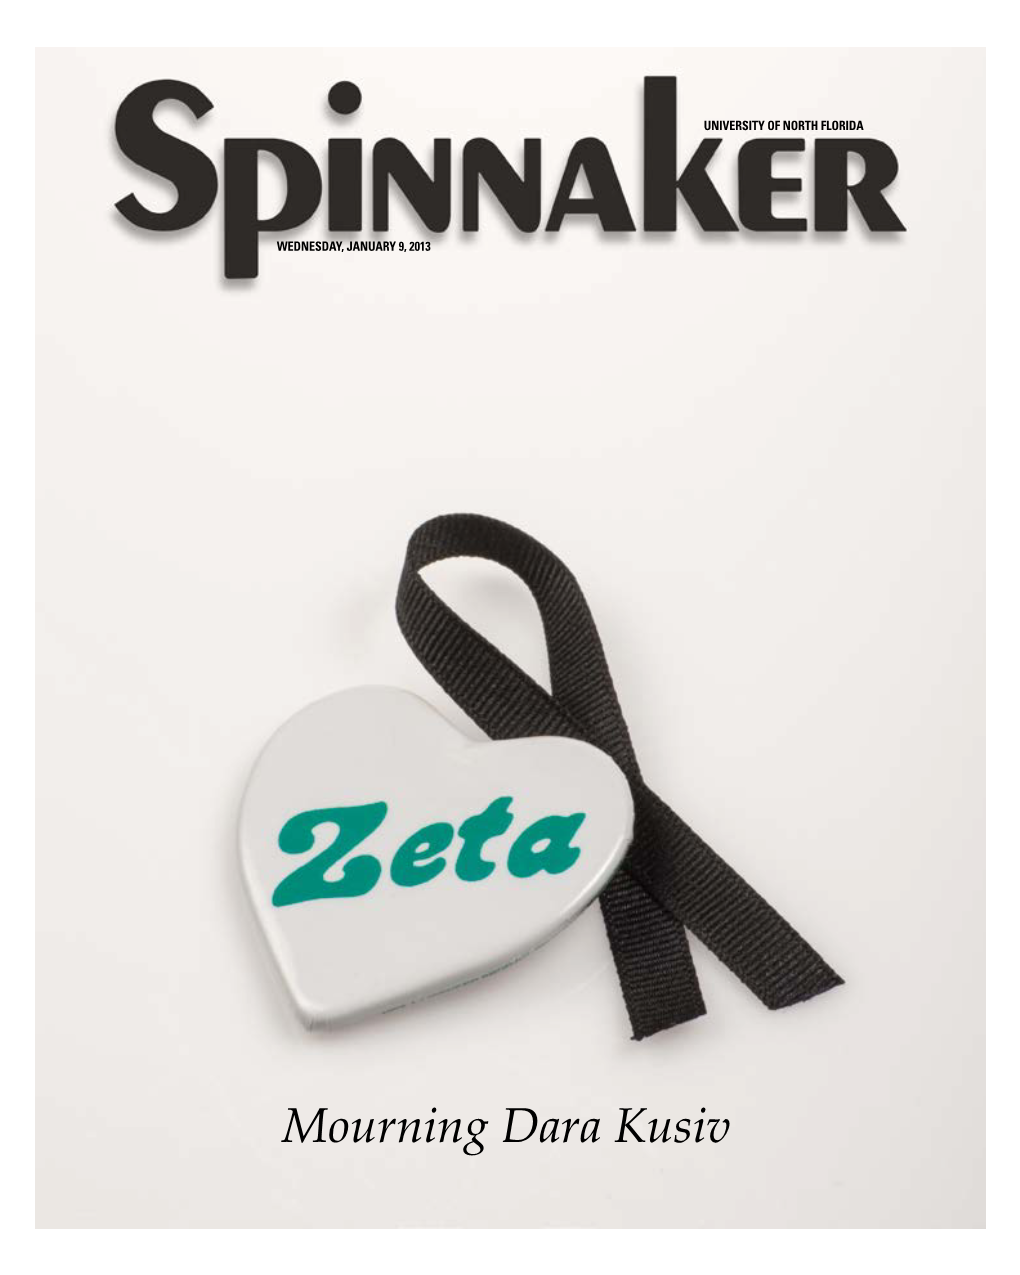 Mourning Dara Kusiv INSIDE 2 Wednesday, January 9, 2013 Spinnaker // Unfspinnaker.Com